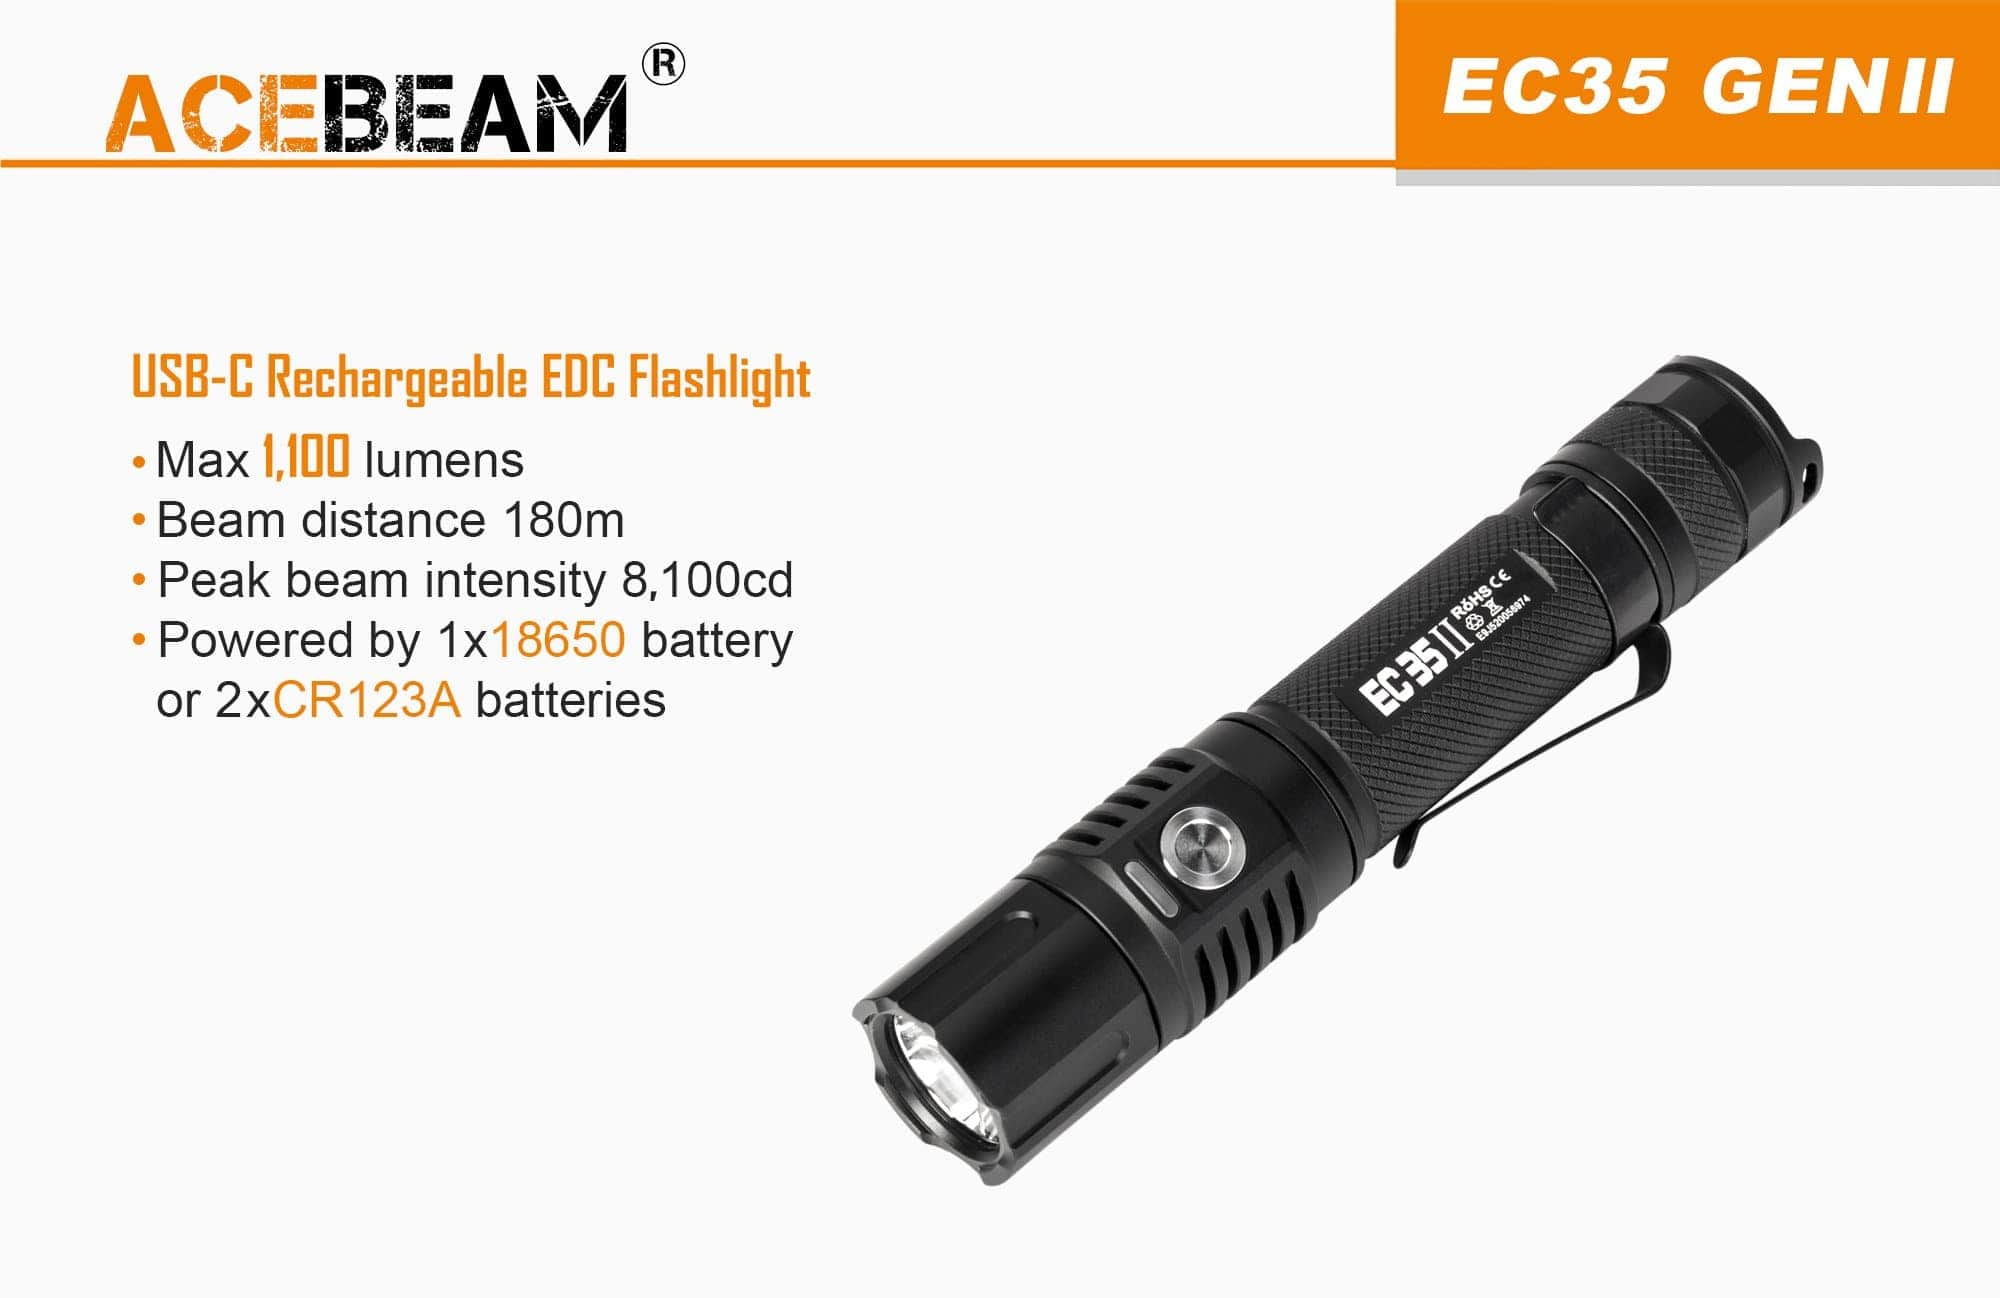 Acebeam EC50 GEN Ⅱ Rechargeable EDC Flashlight